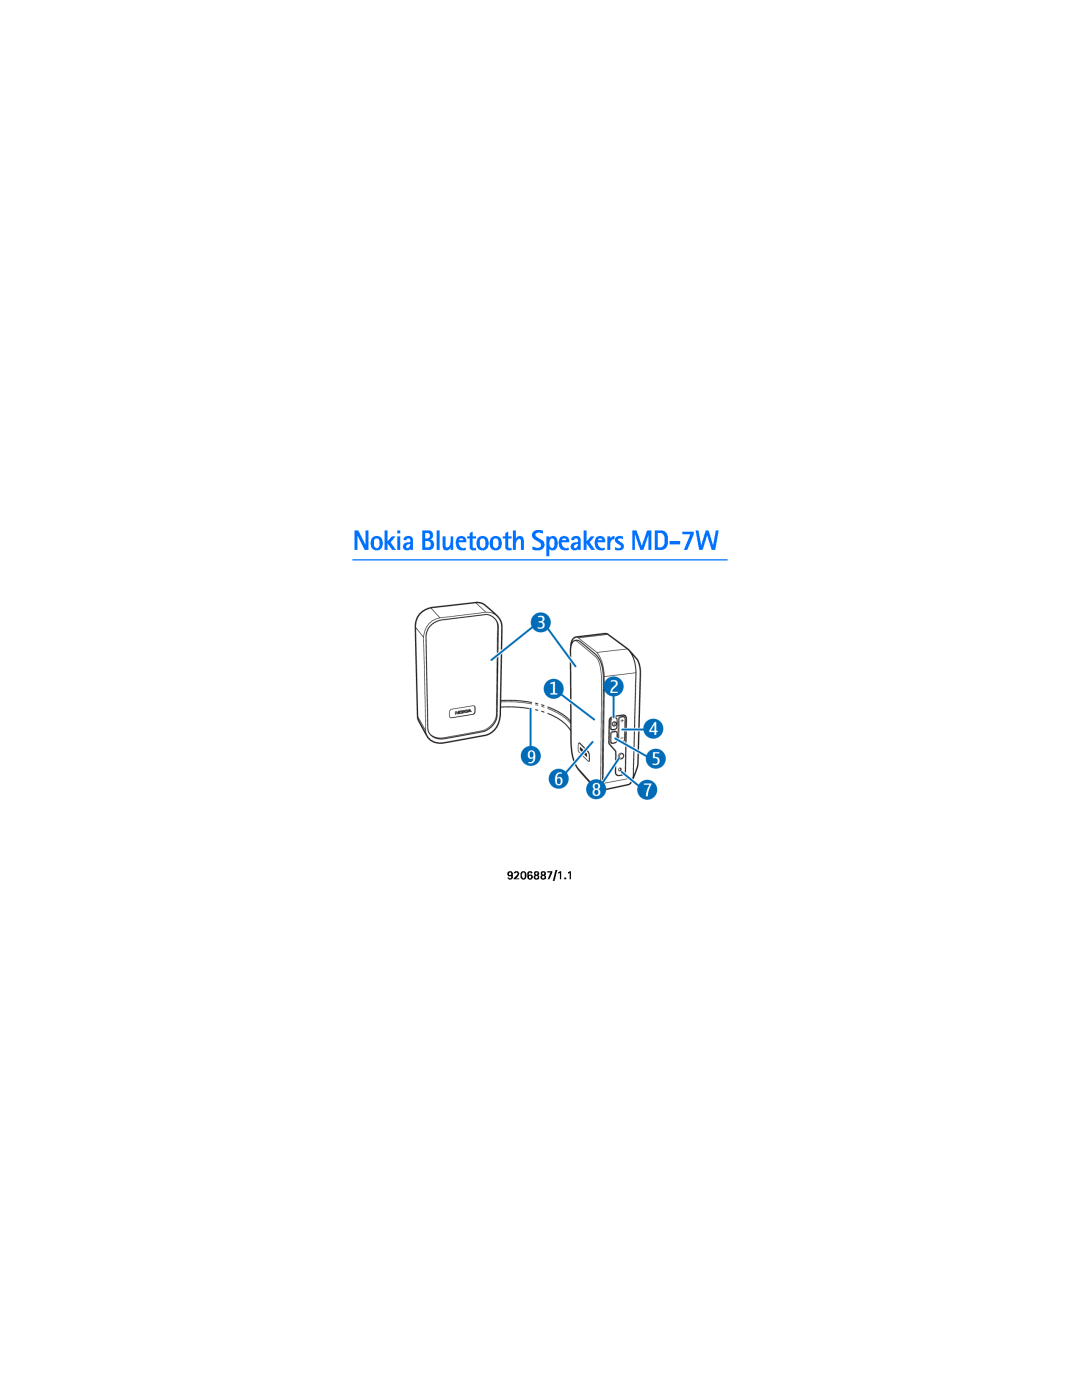 Nokia manual Nokia Bluetooth Speakers MD-7W, 9206887/1.1 